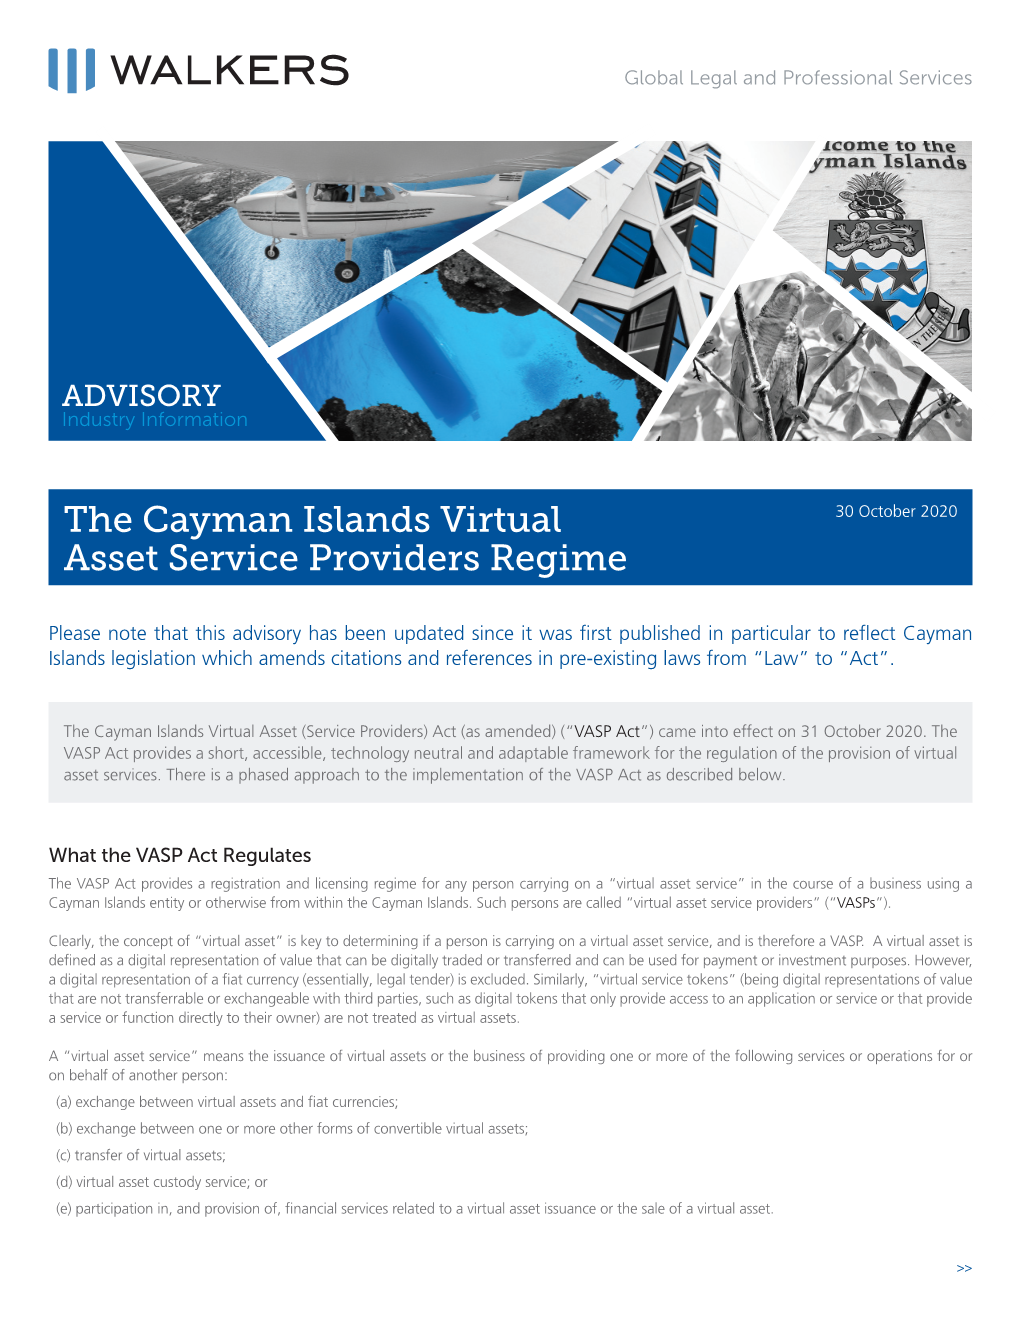 The Cayman Islands Virtual Asset Service Providers